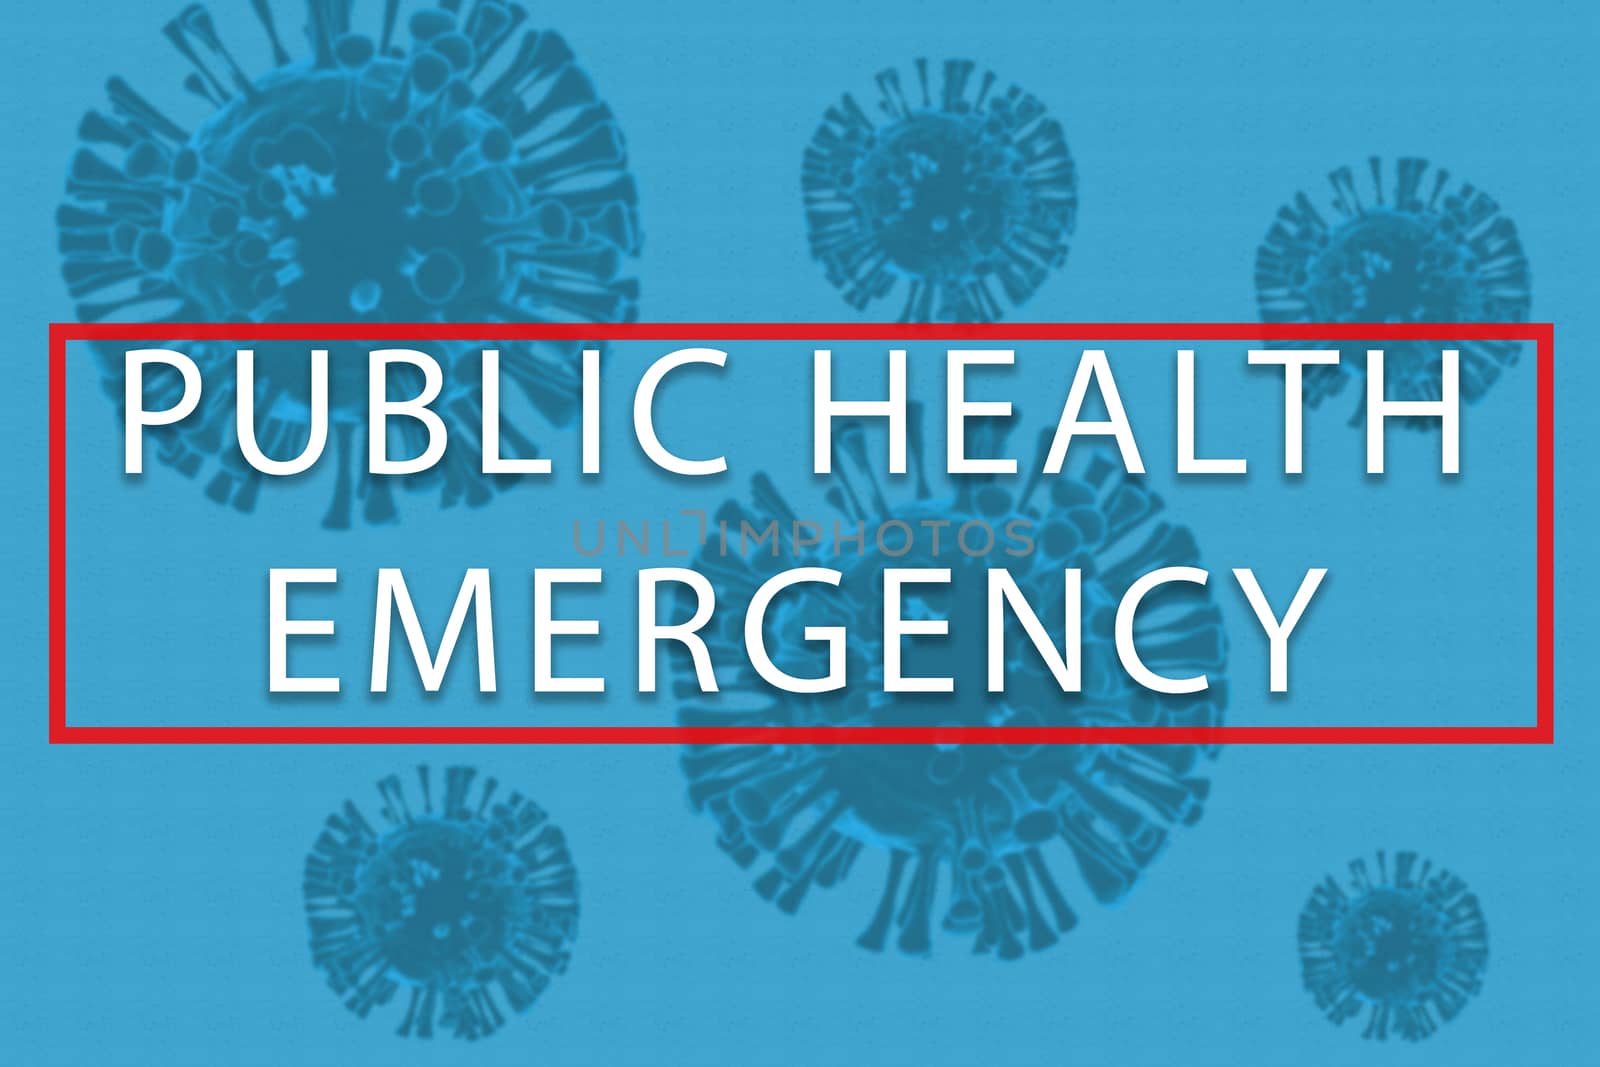 Concept of public health emergency due to coronavirus or covid-19 pandemic or outbreak. by lakshmiprasad.maski@gmai.com